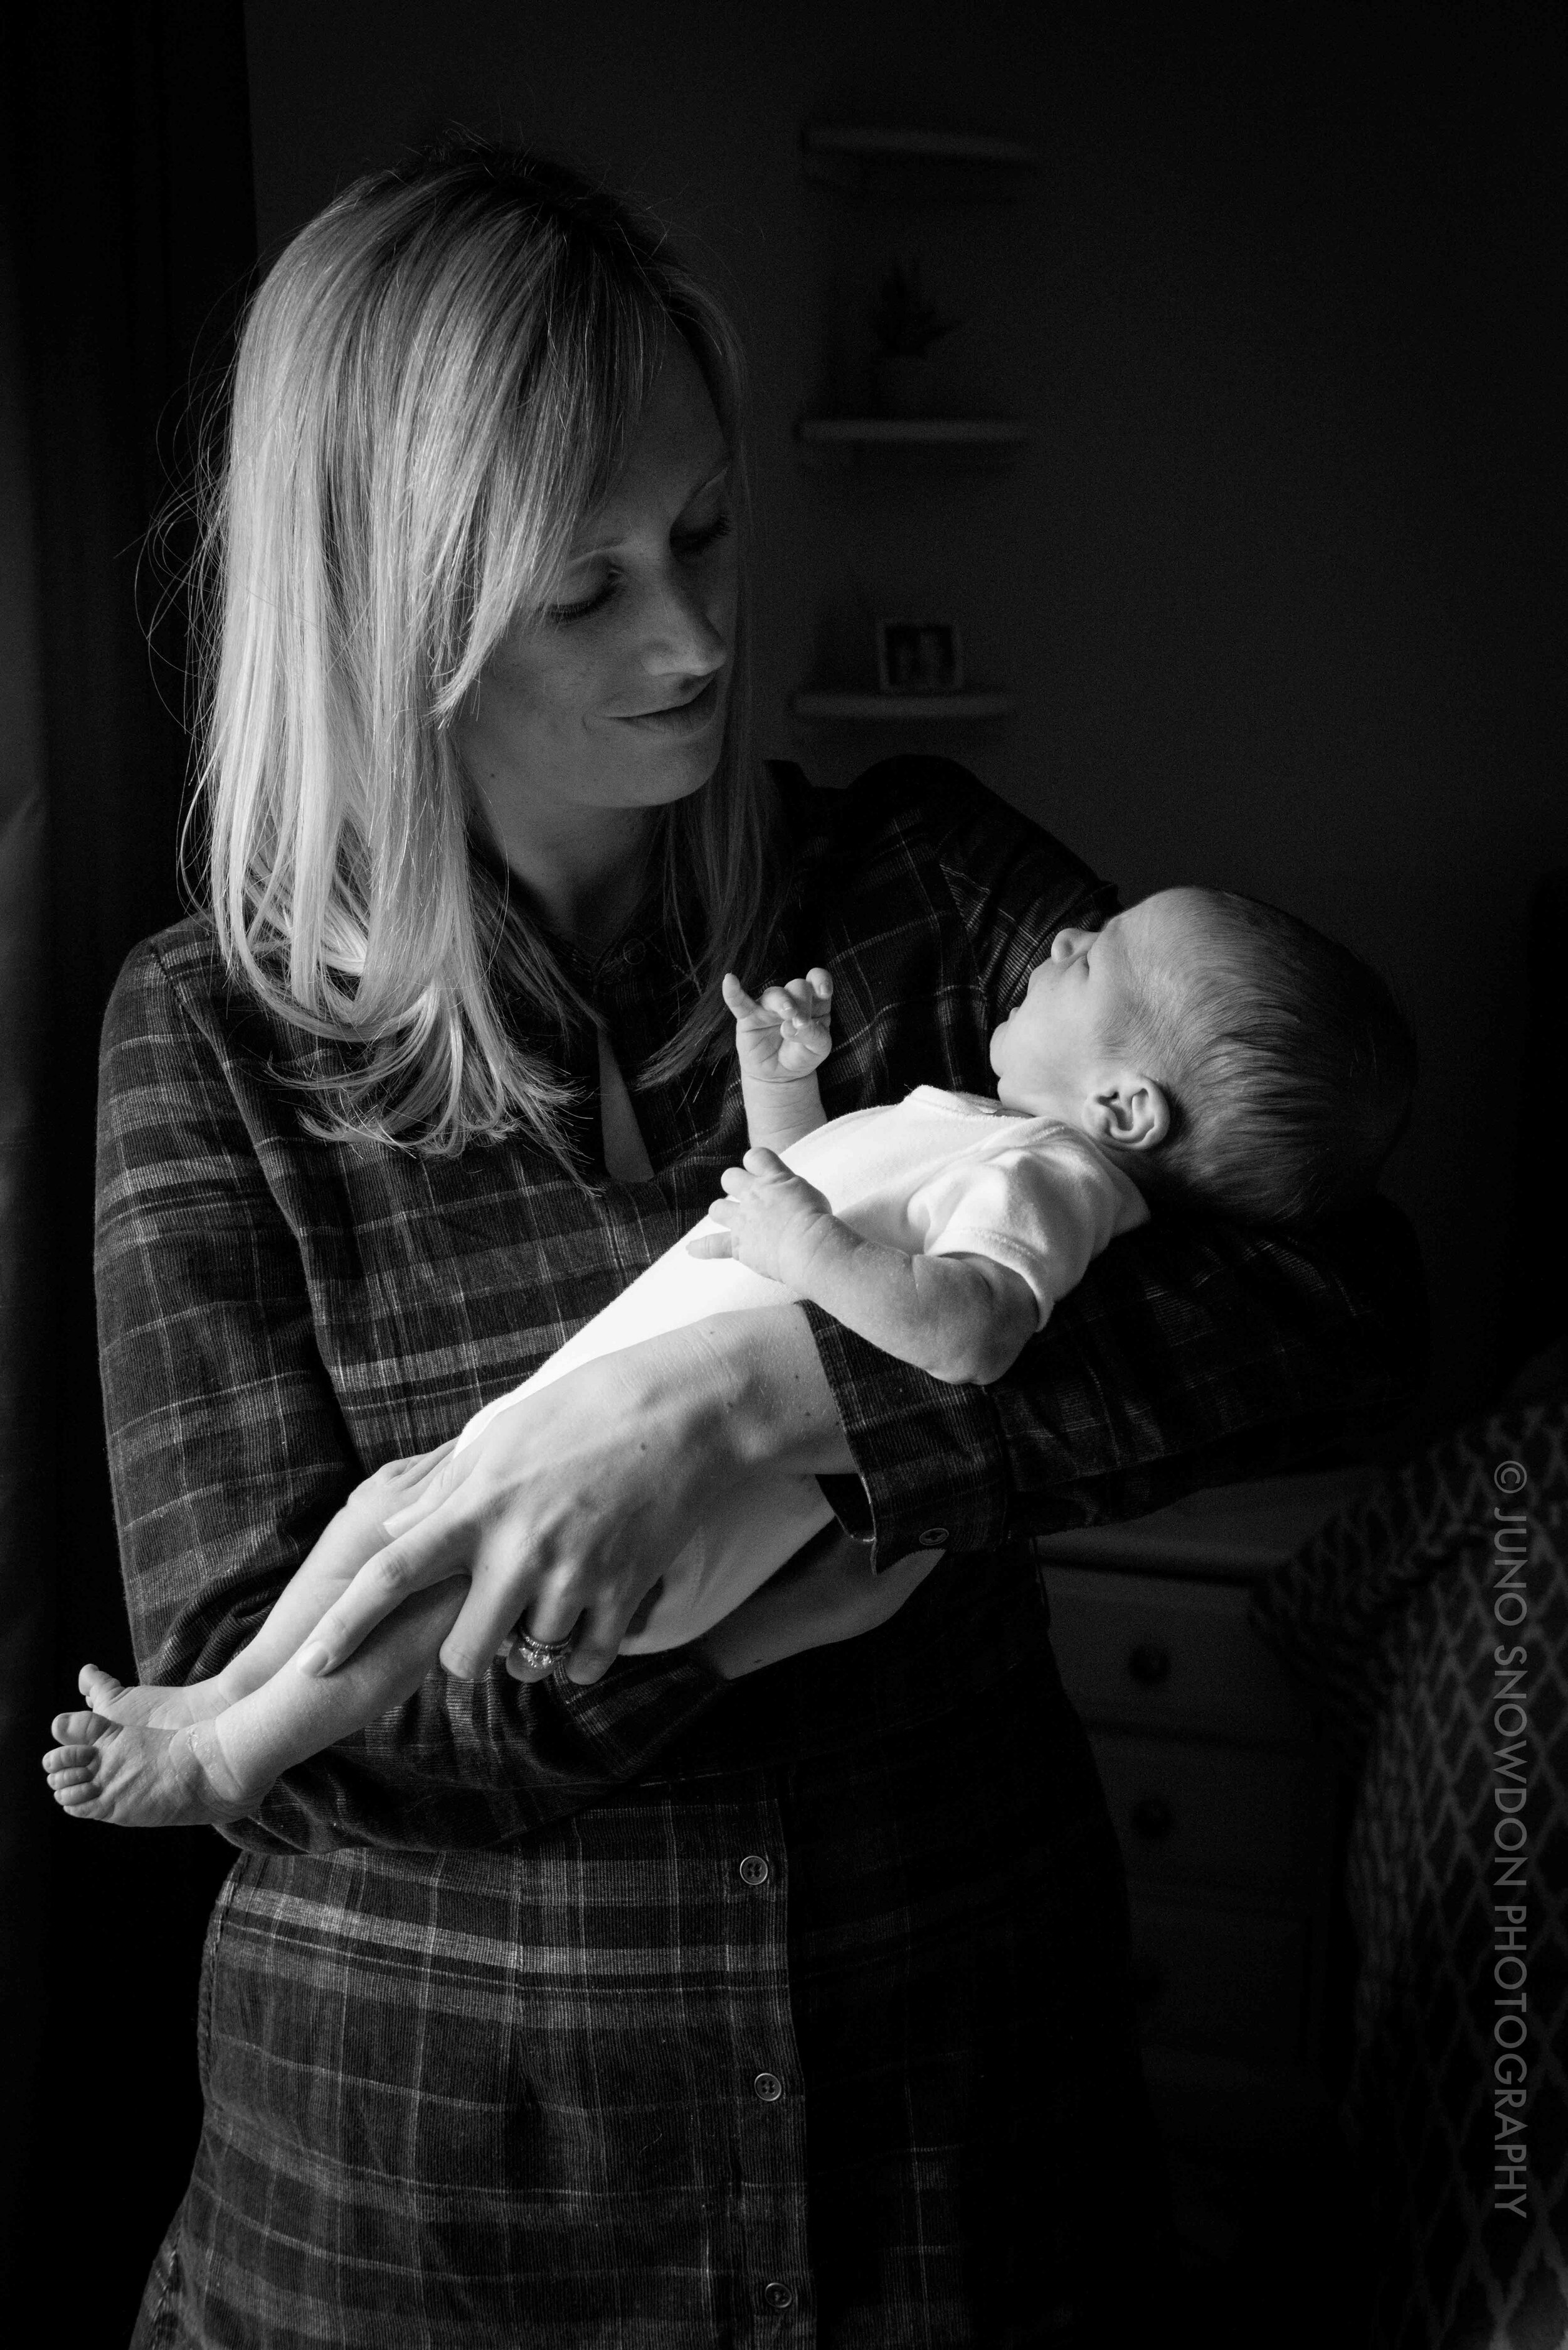 juno-snowdon-photography-newborn-family-portraits-london-3575.jpg